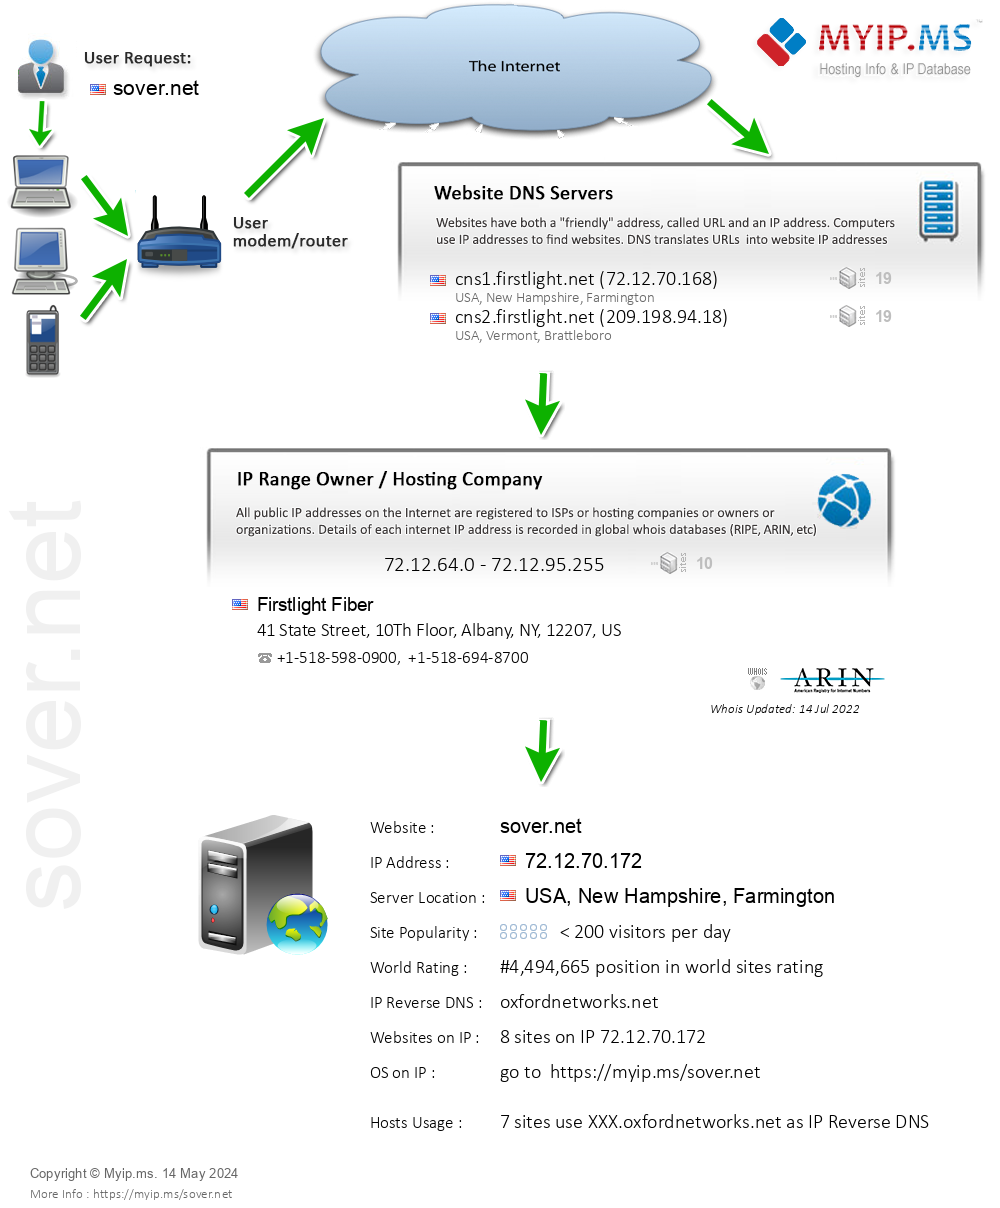 Sover.net - Website Hosting Visual IP Diagram